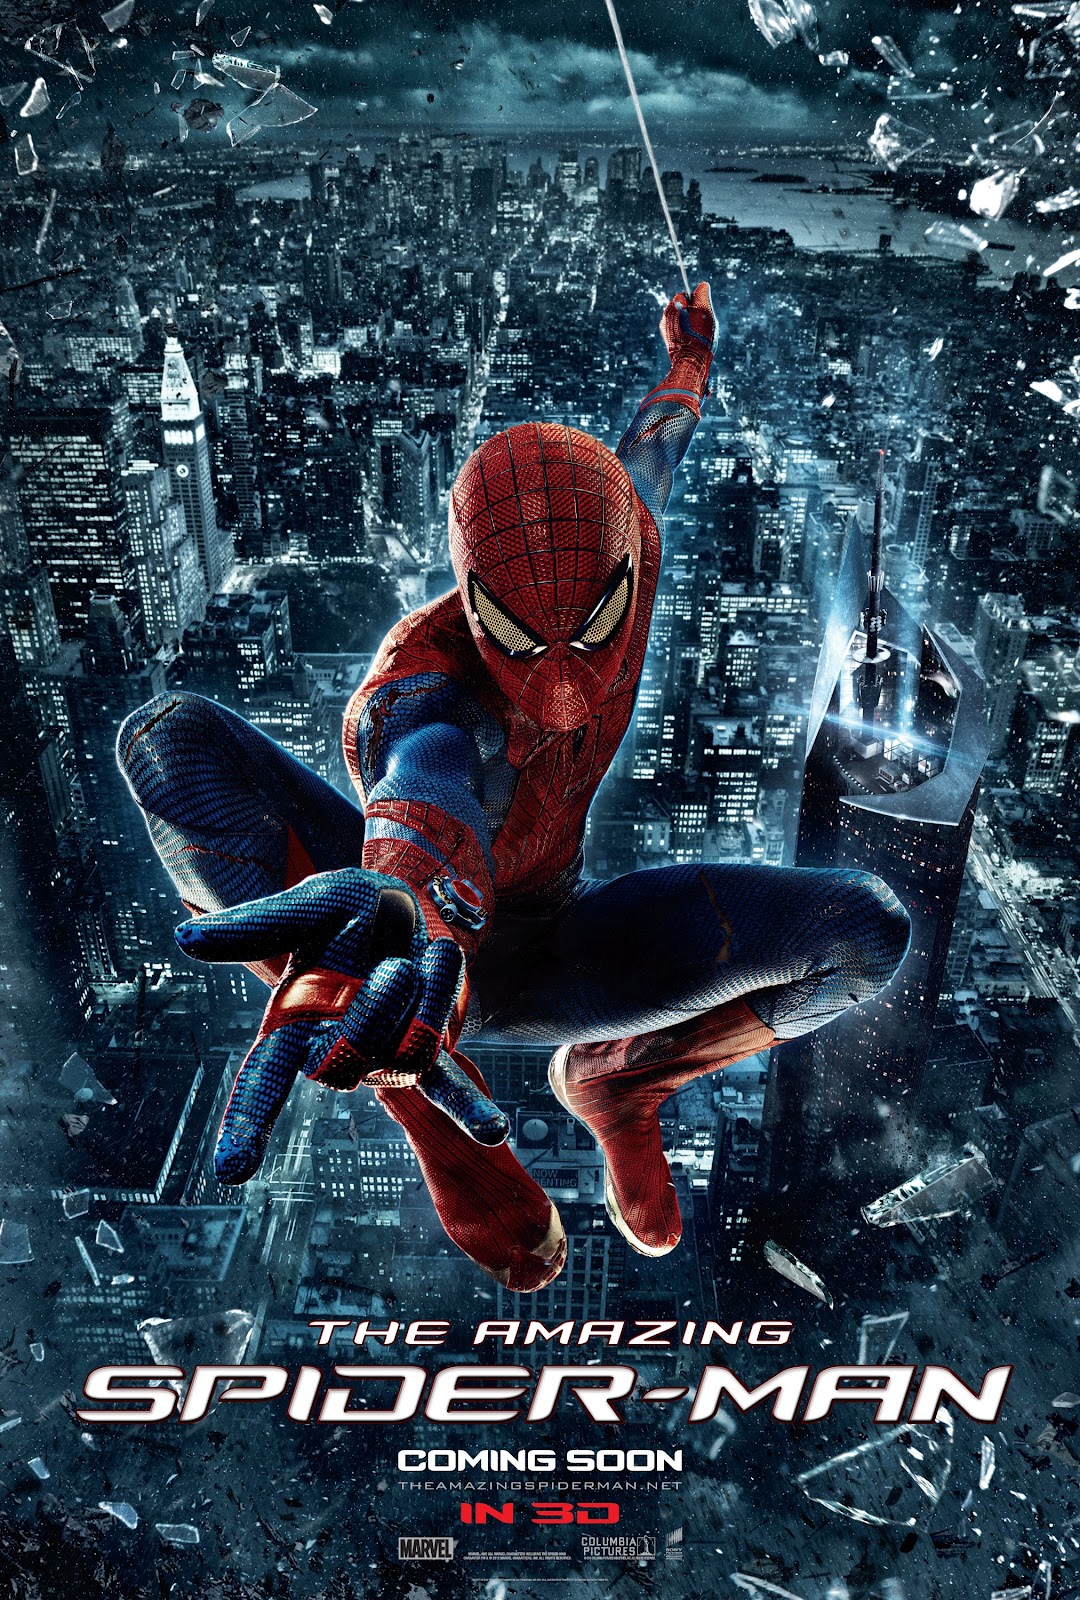 http://2.bp.blogspot.com/-4aTrGm2Mvak/UEp3mGQghrI/AAAAAAAAAao/pNqgzKHqEKc/s1600/Amazing_Spider-Man_theatrical_poster_02.jpg